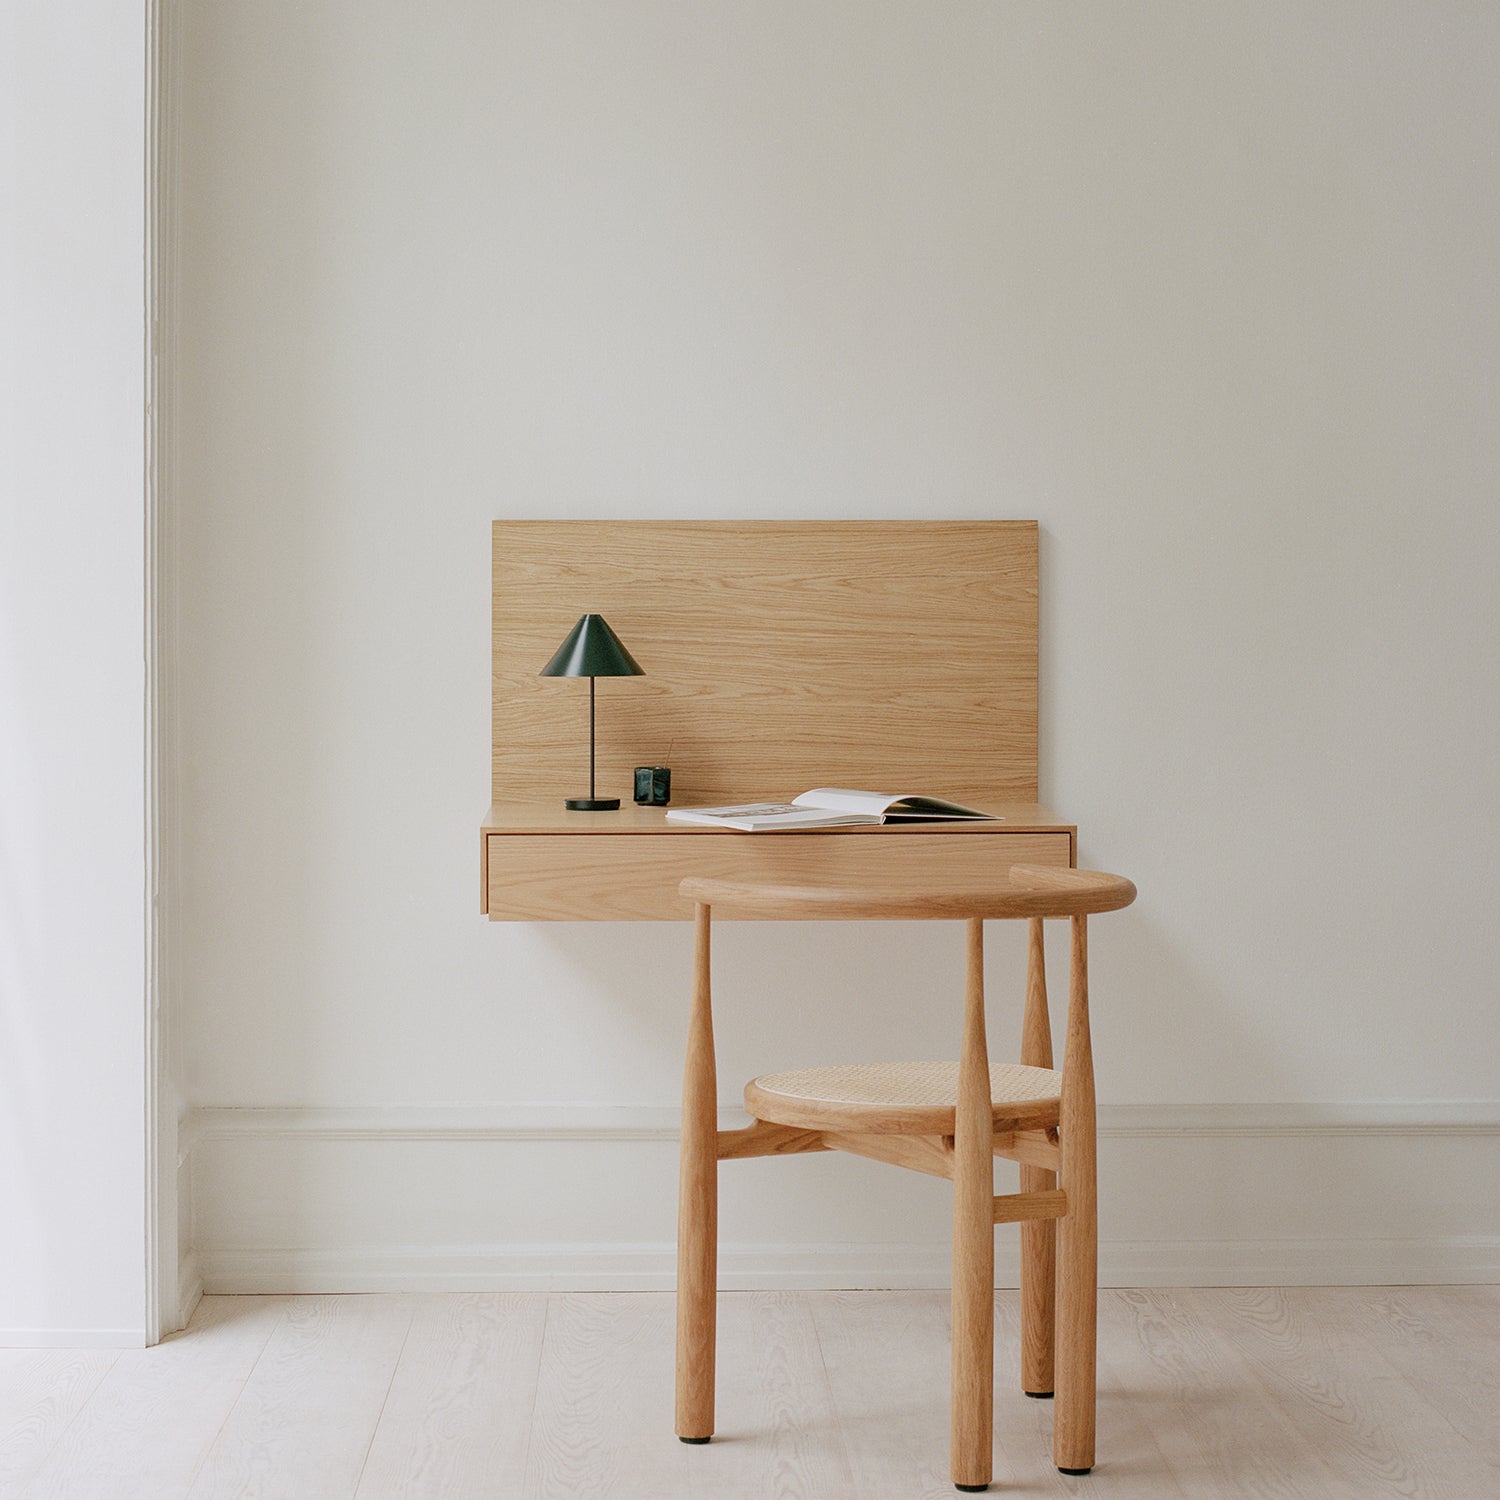 Tana Wall Mounted Desk - The Design Choice